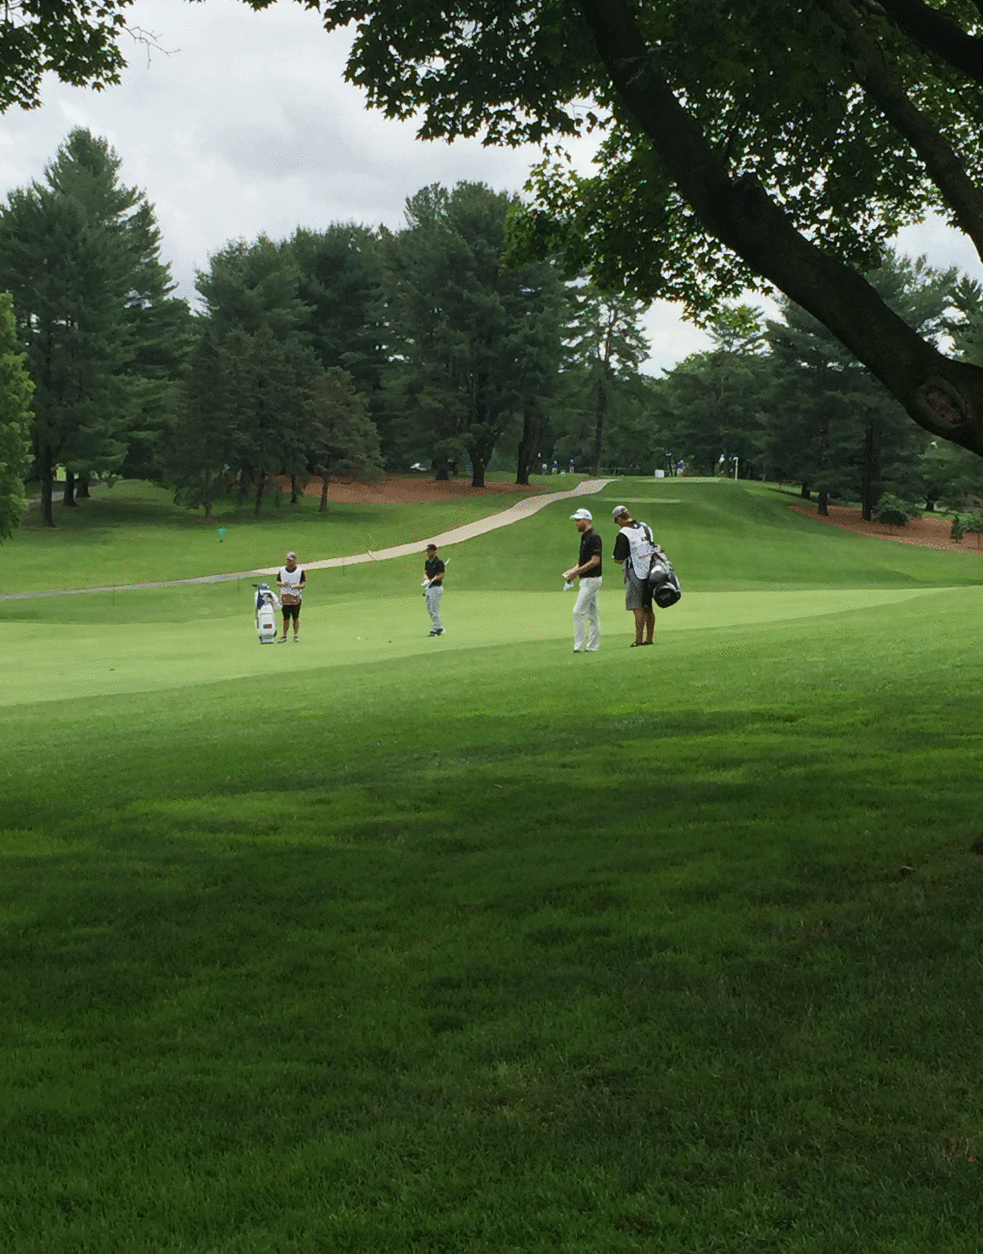 Golfers on the course on Thursday, June 23, 2016. (Courtesy Cody House)